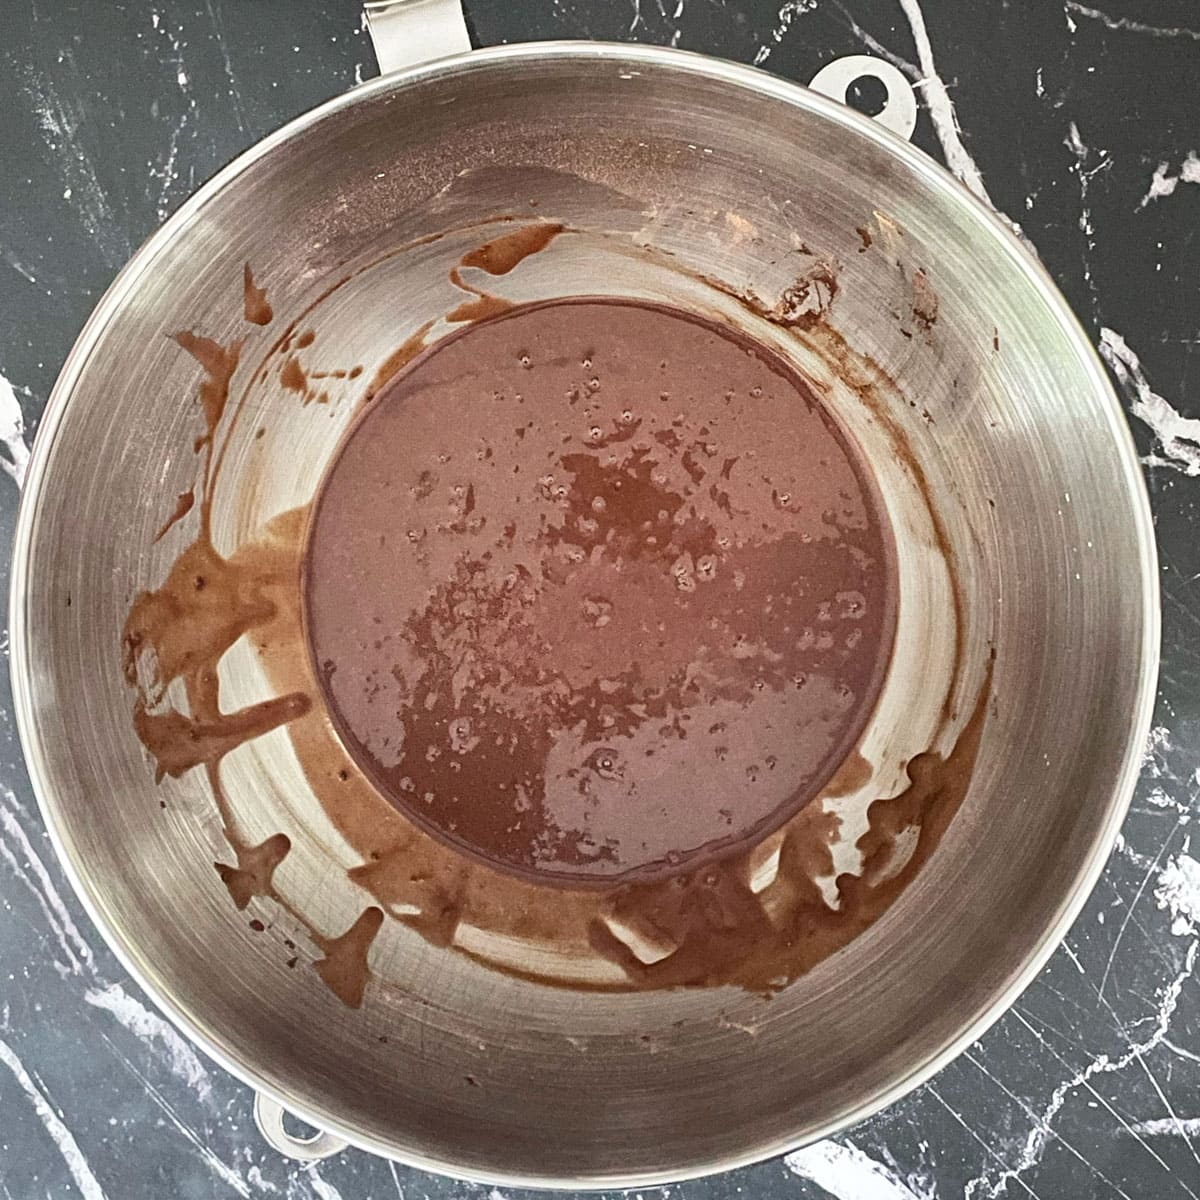 Chocolate cake batter in mixer bowl.